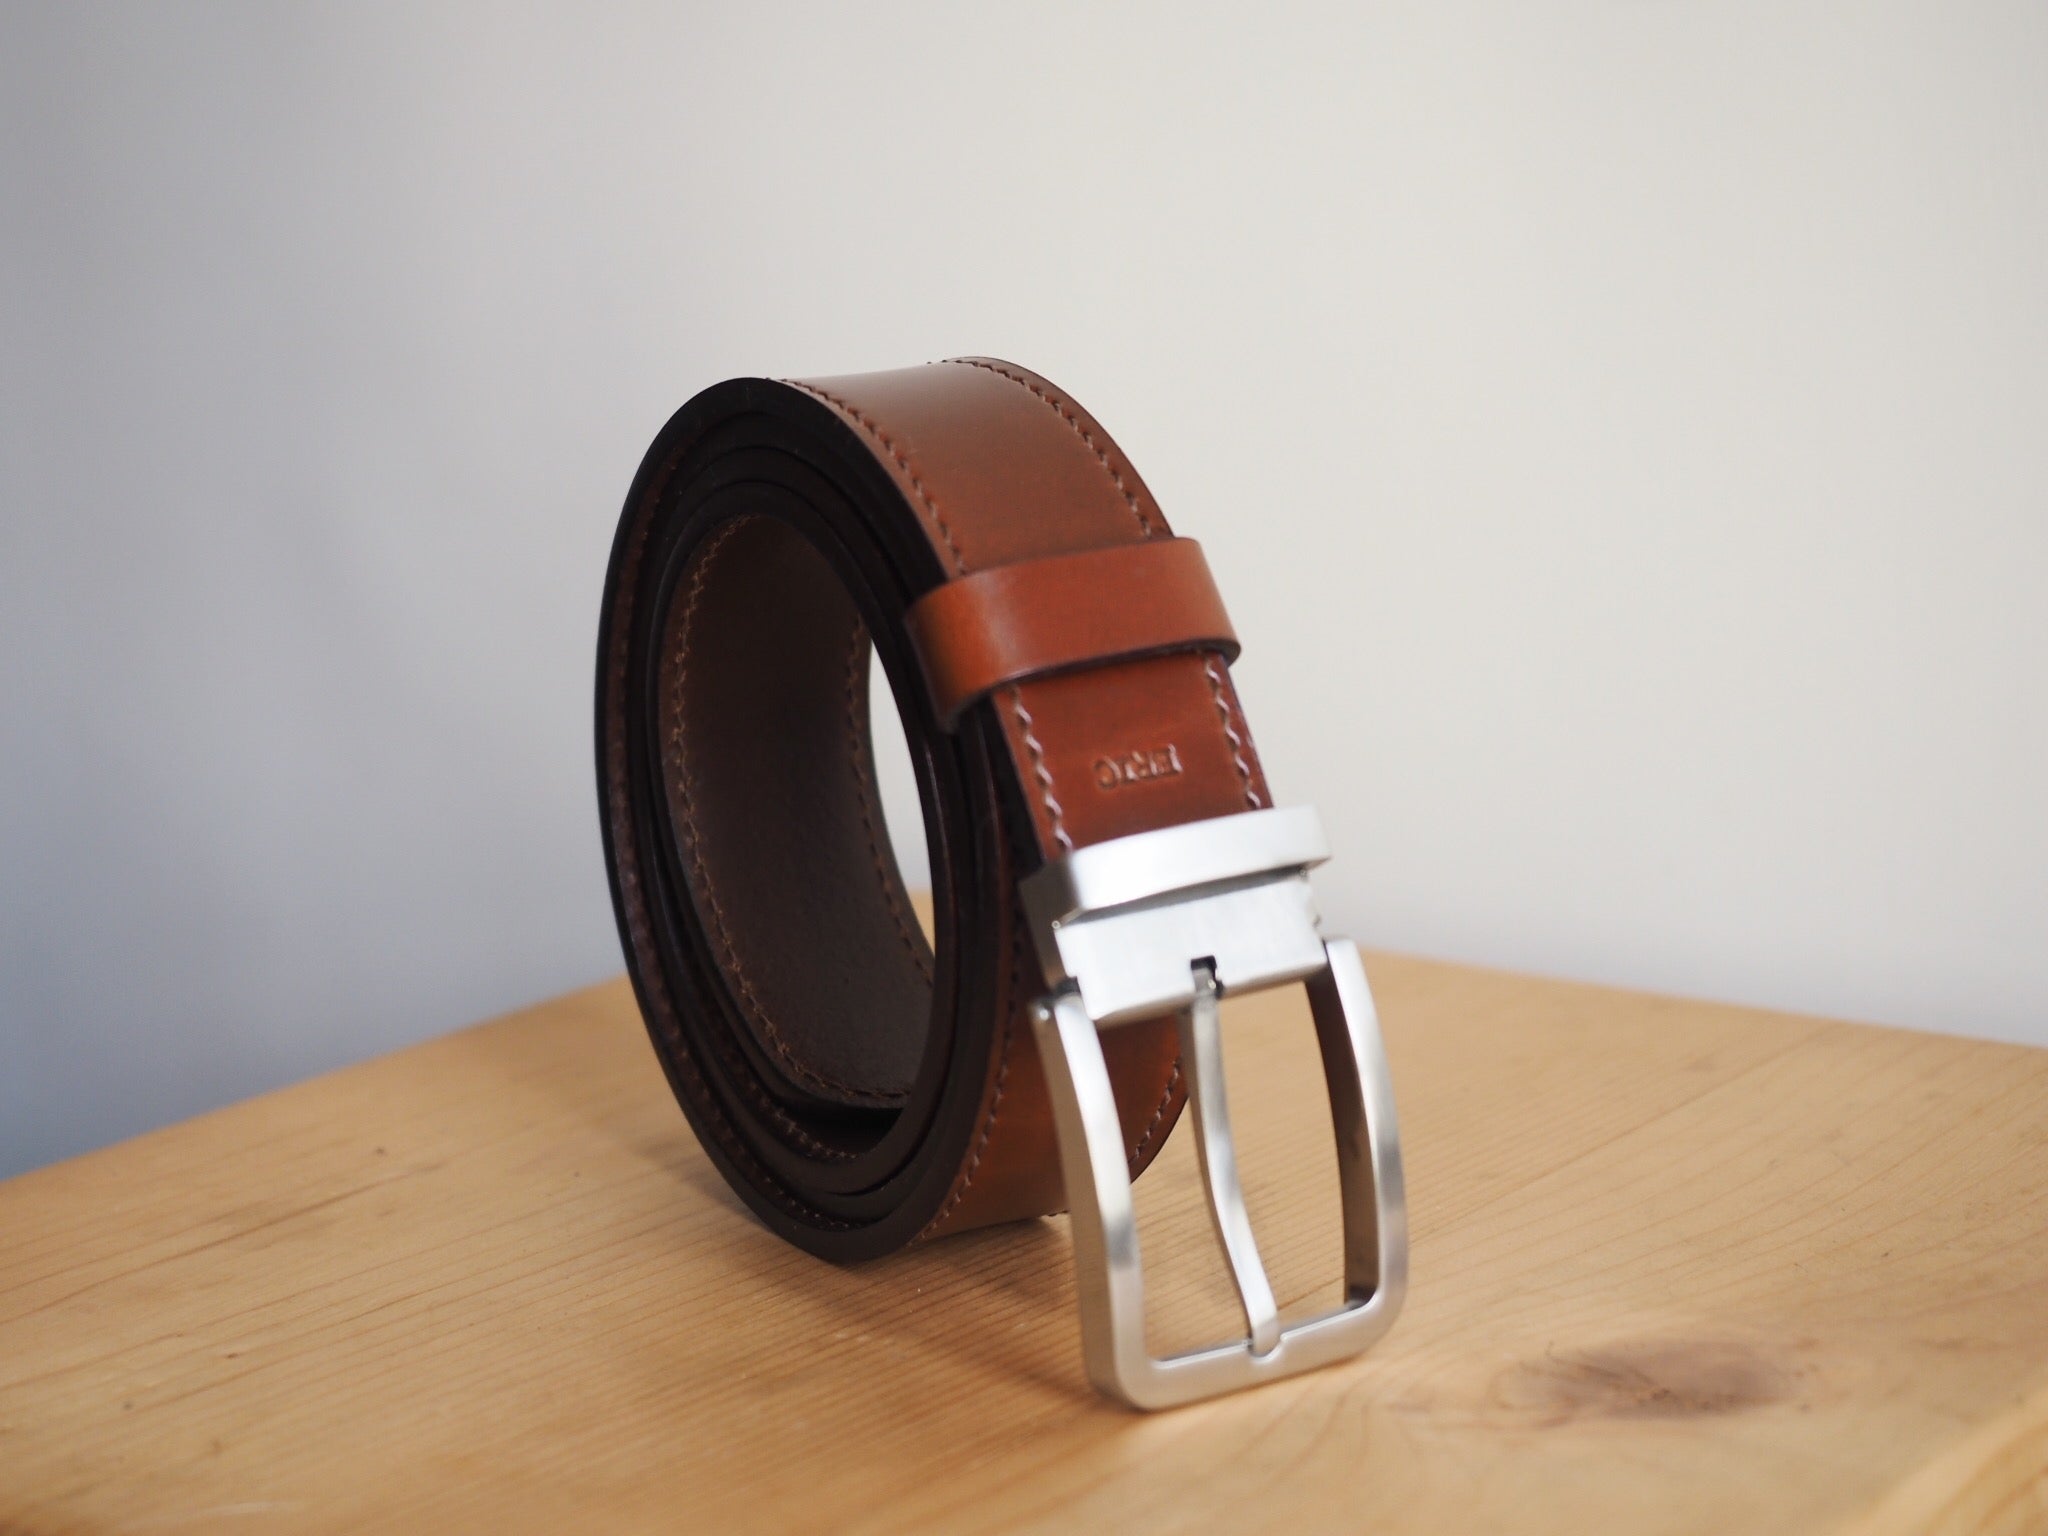 Bridle Leather Belt